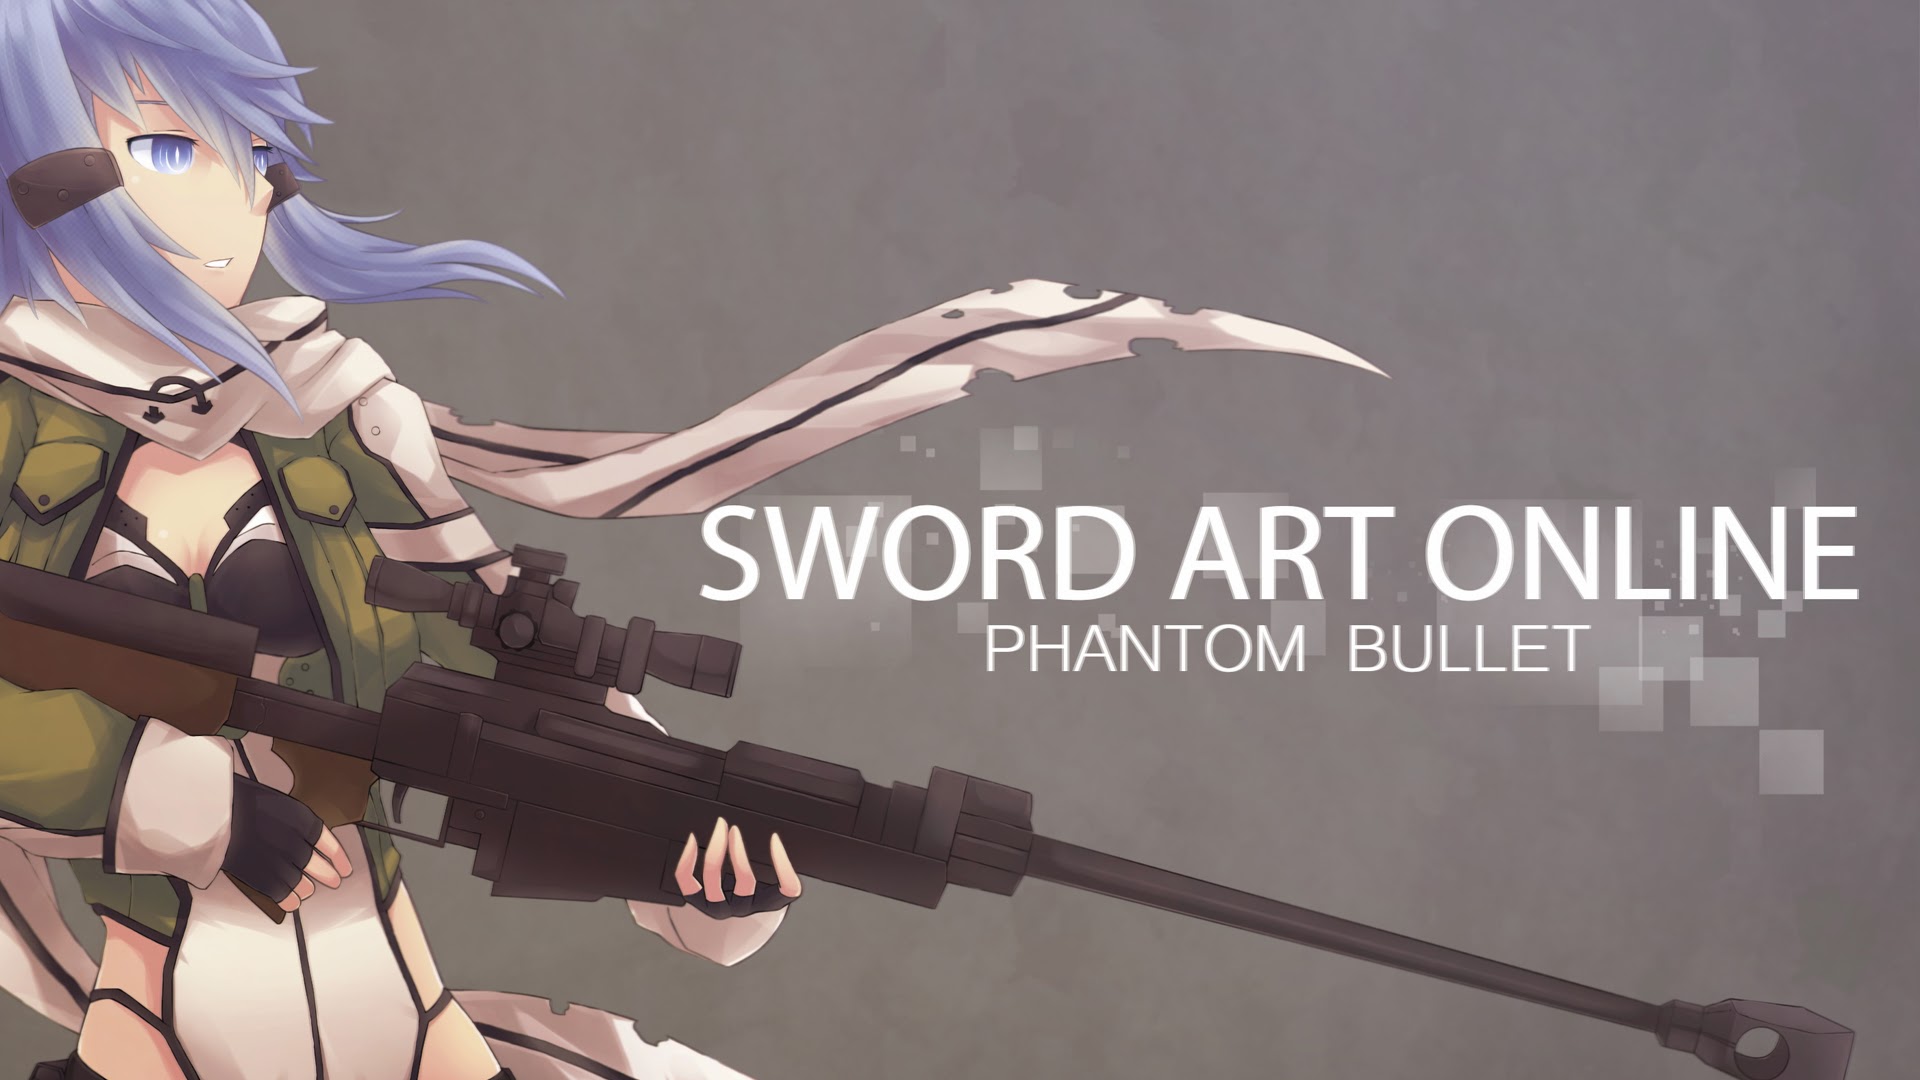  bullet gun gale online anime 2014 SAO 2 GGO hd wallpaper 1920x1080 6p